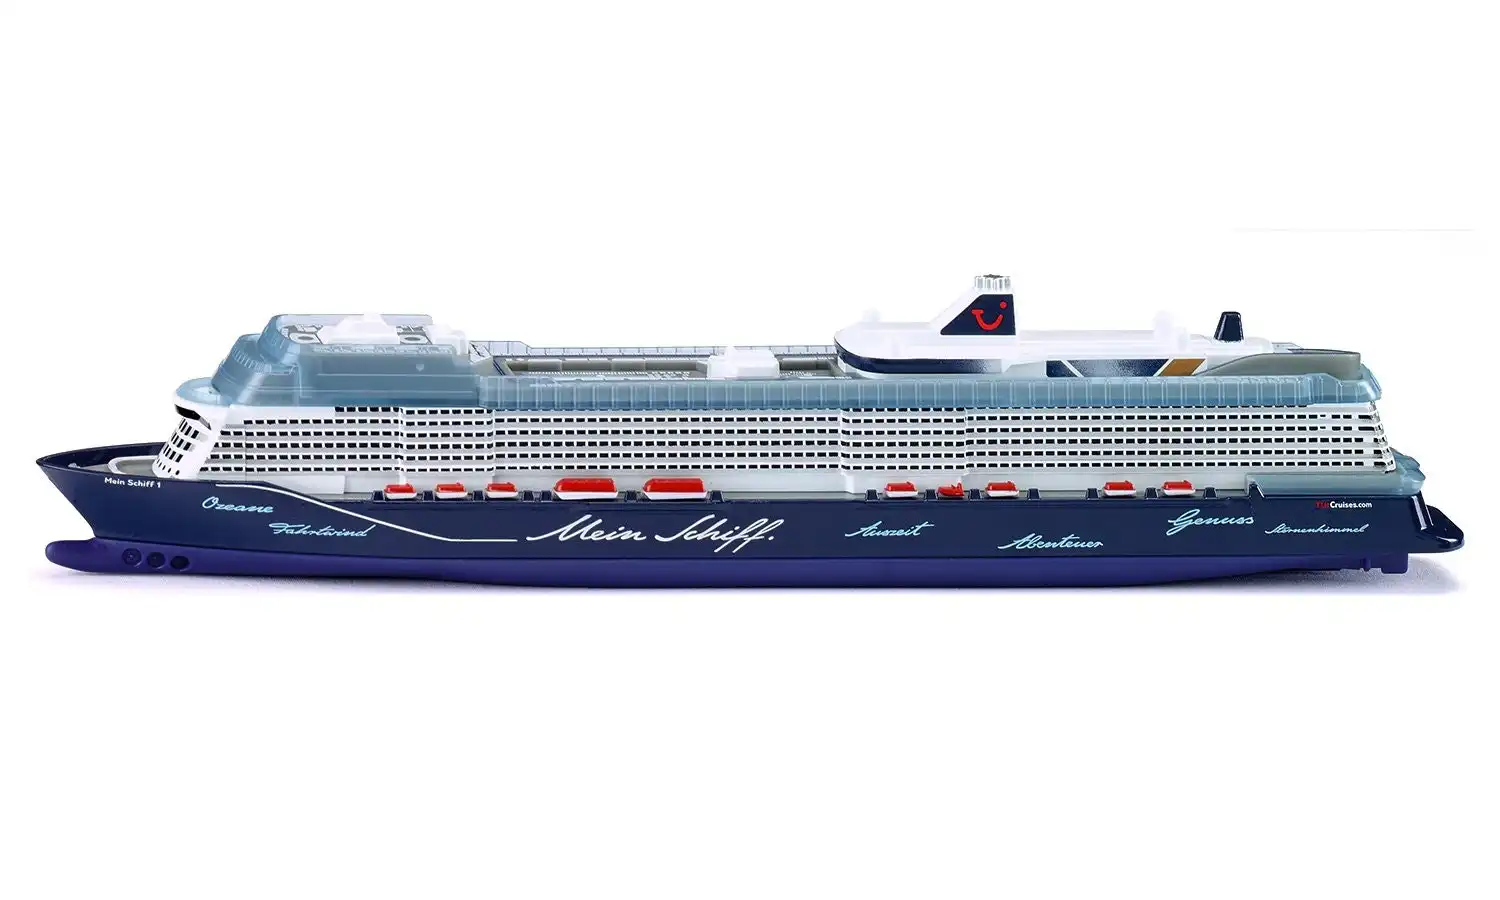 Siku - Mein Schiff 1 Cruise Ship - Scale 1:1400